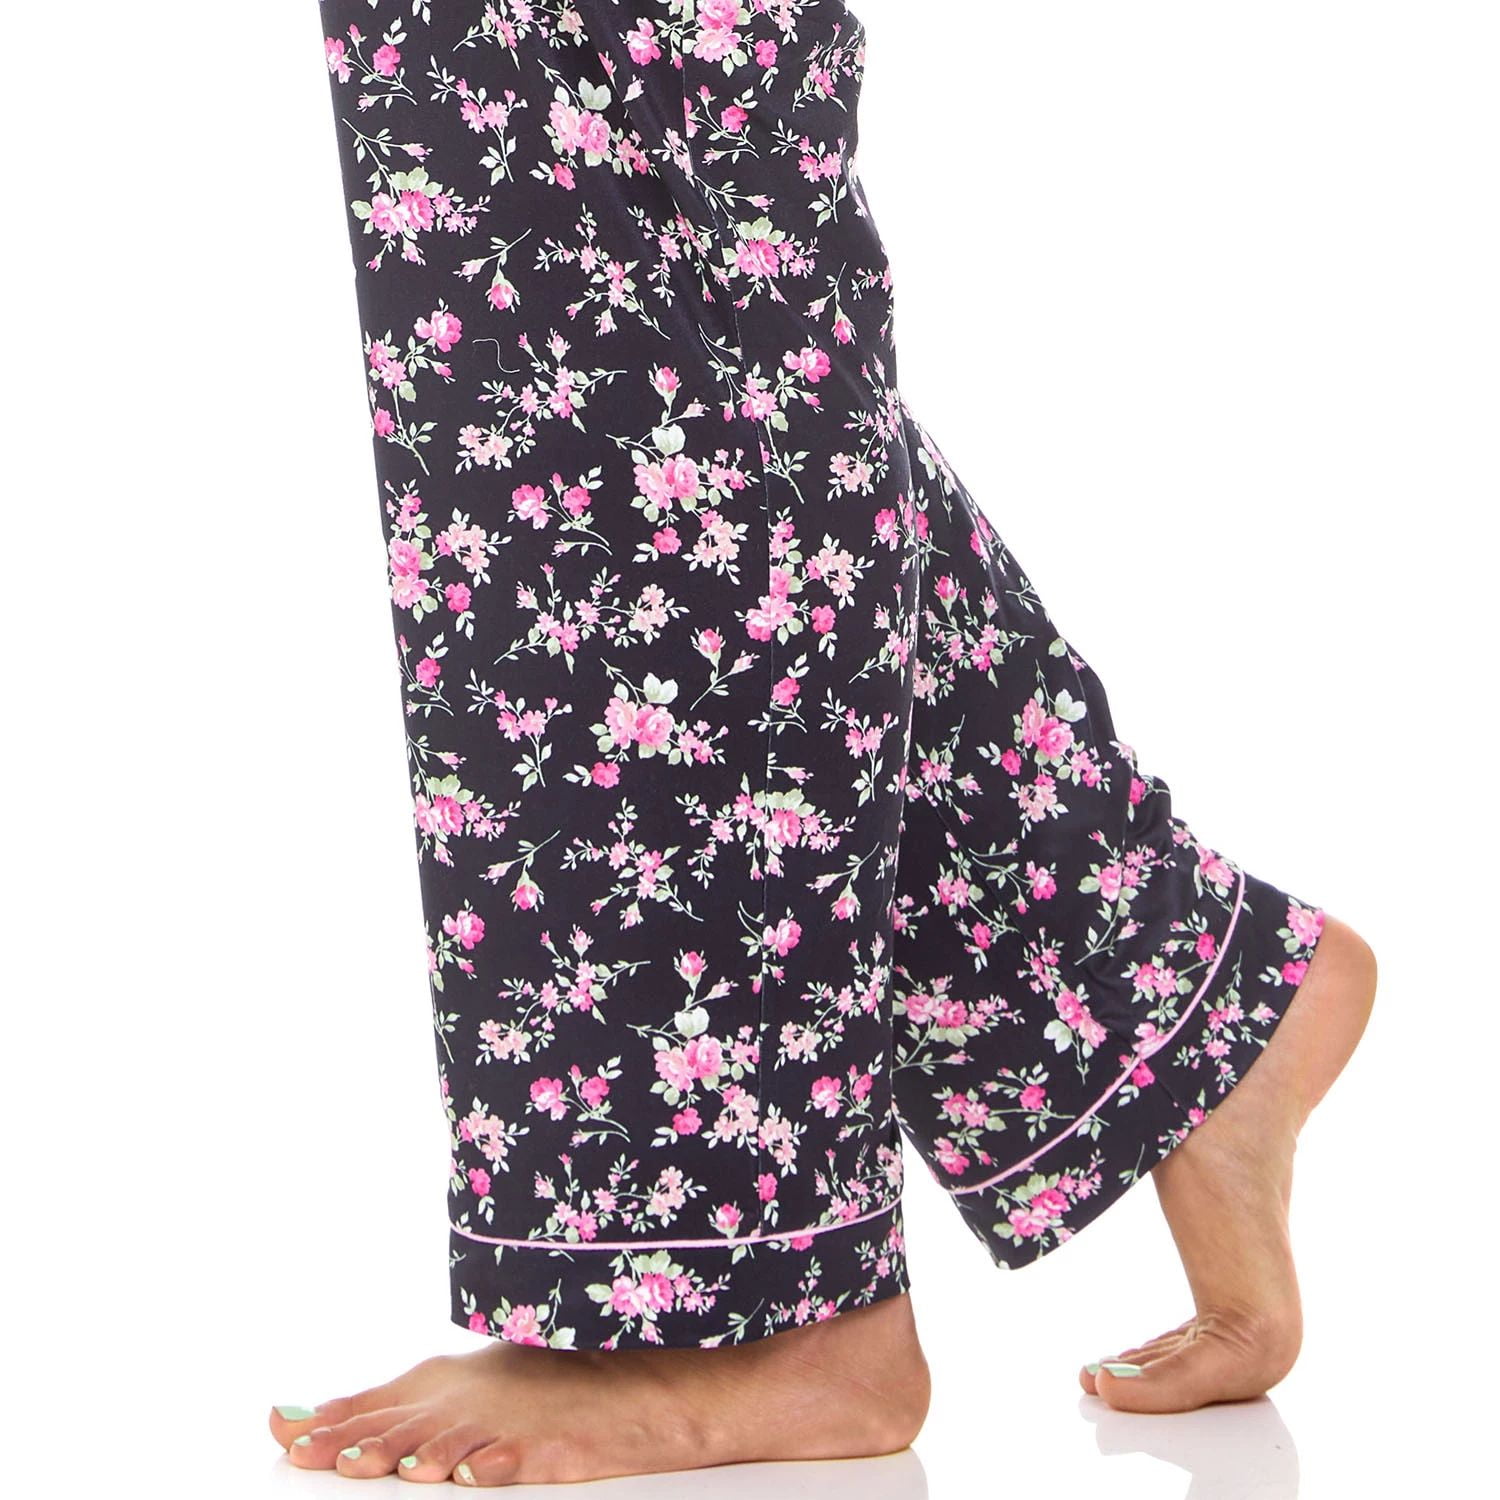 Women's Pajama Pants Bullfinch Birds Leaves Berries Sleepwear Lounge Pajama  Bottoms XS at  Women's Clothing store